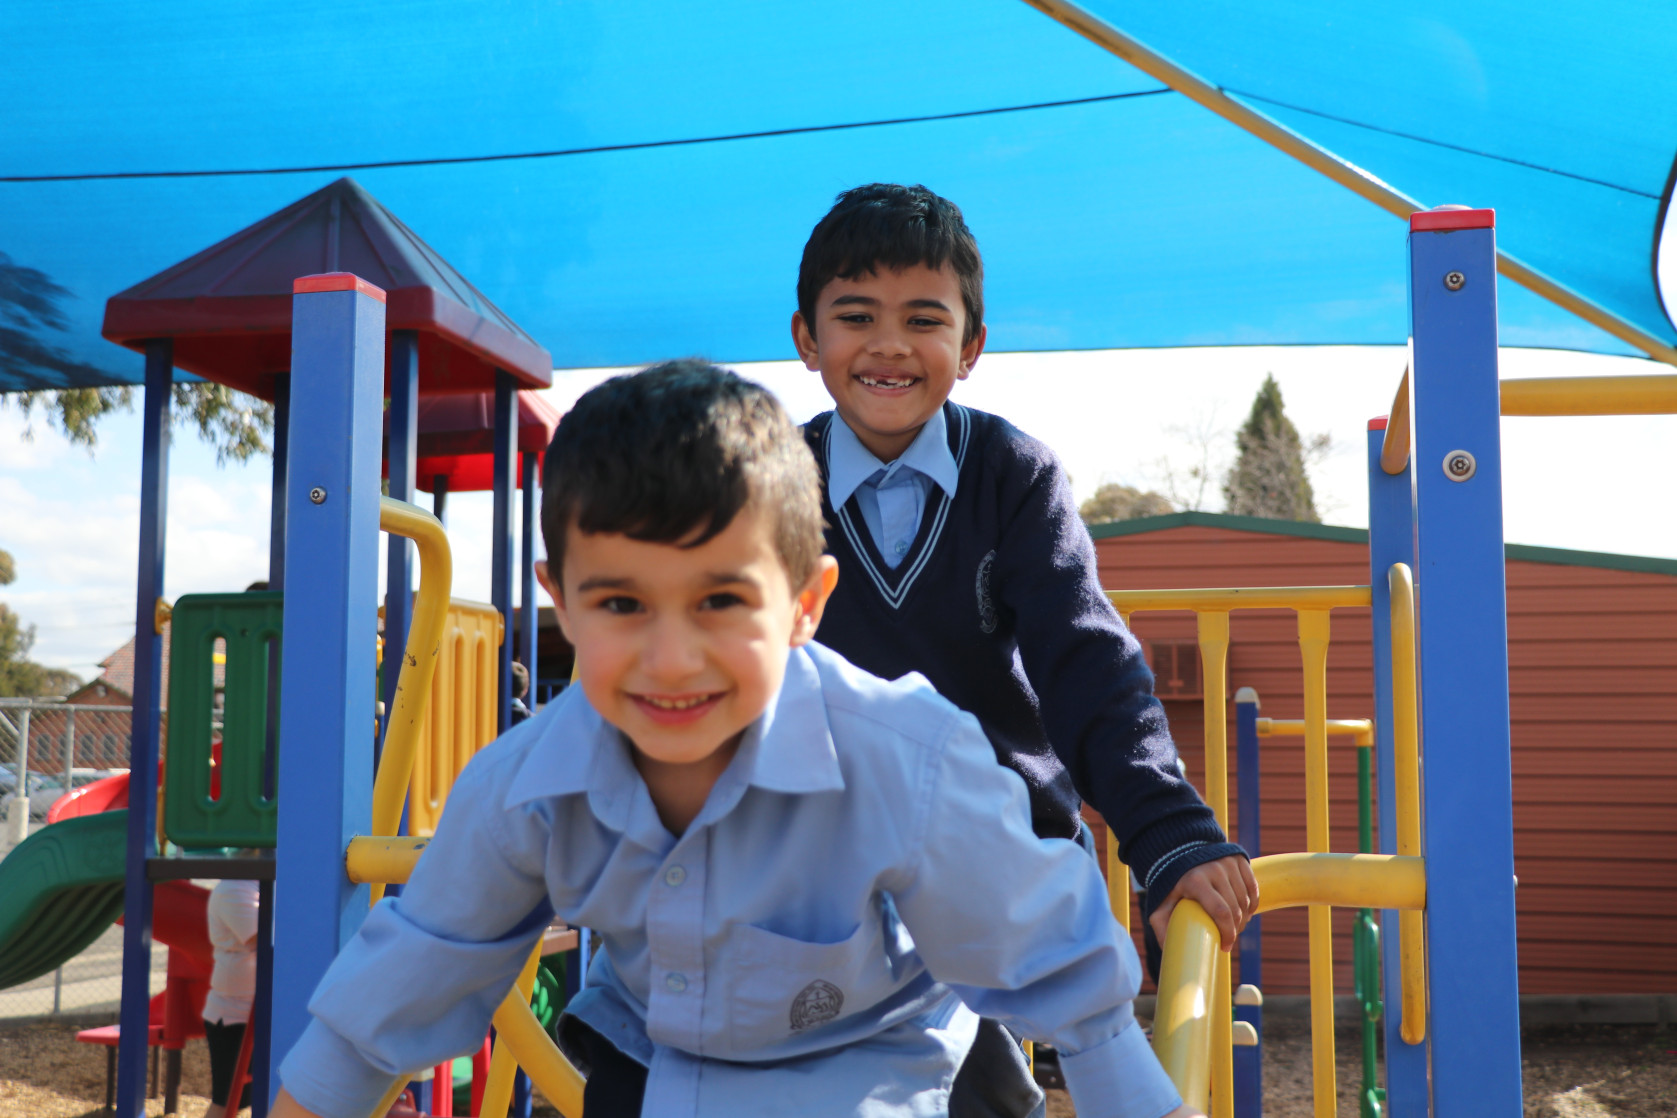 Kids on playground